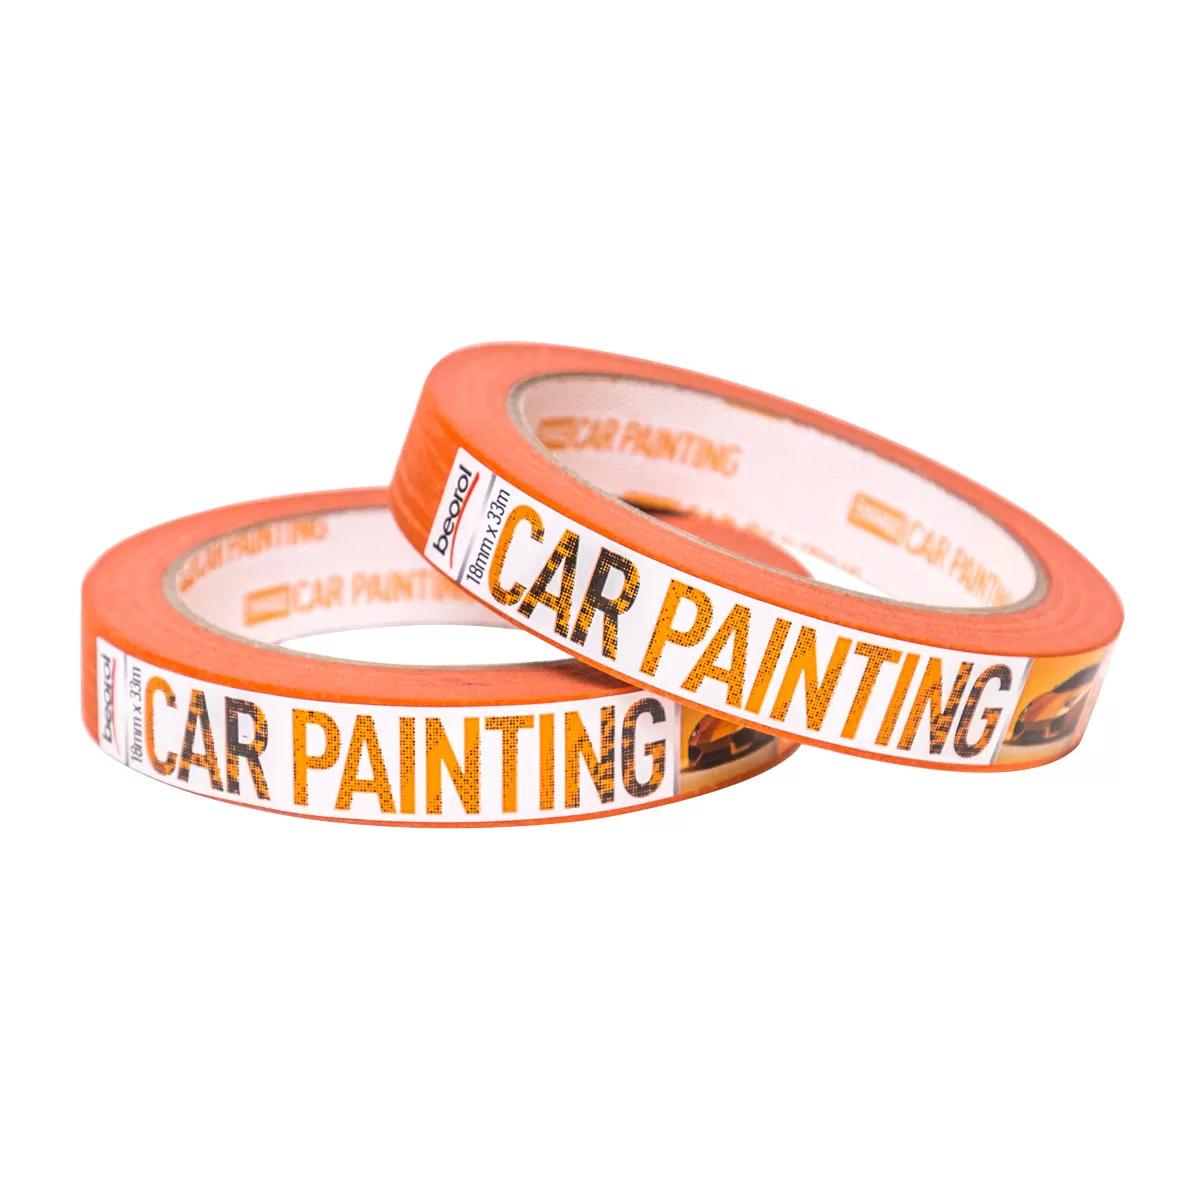 Car-painter masking tape 18mm x 33m, 100ᵒC 